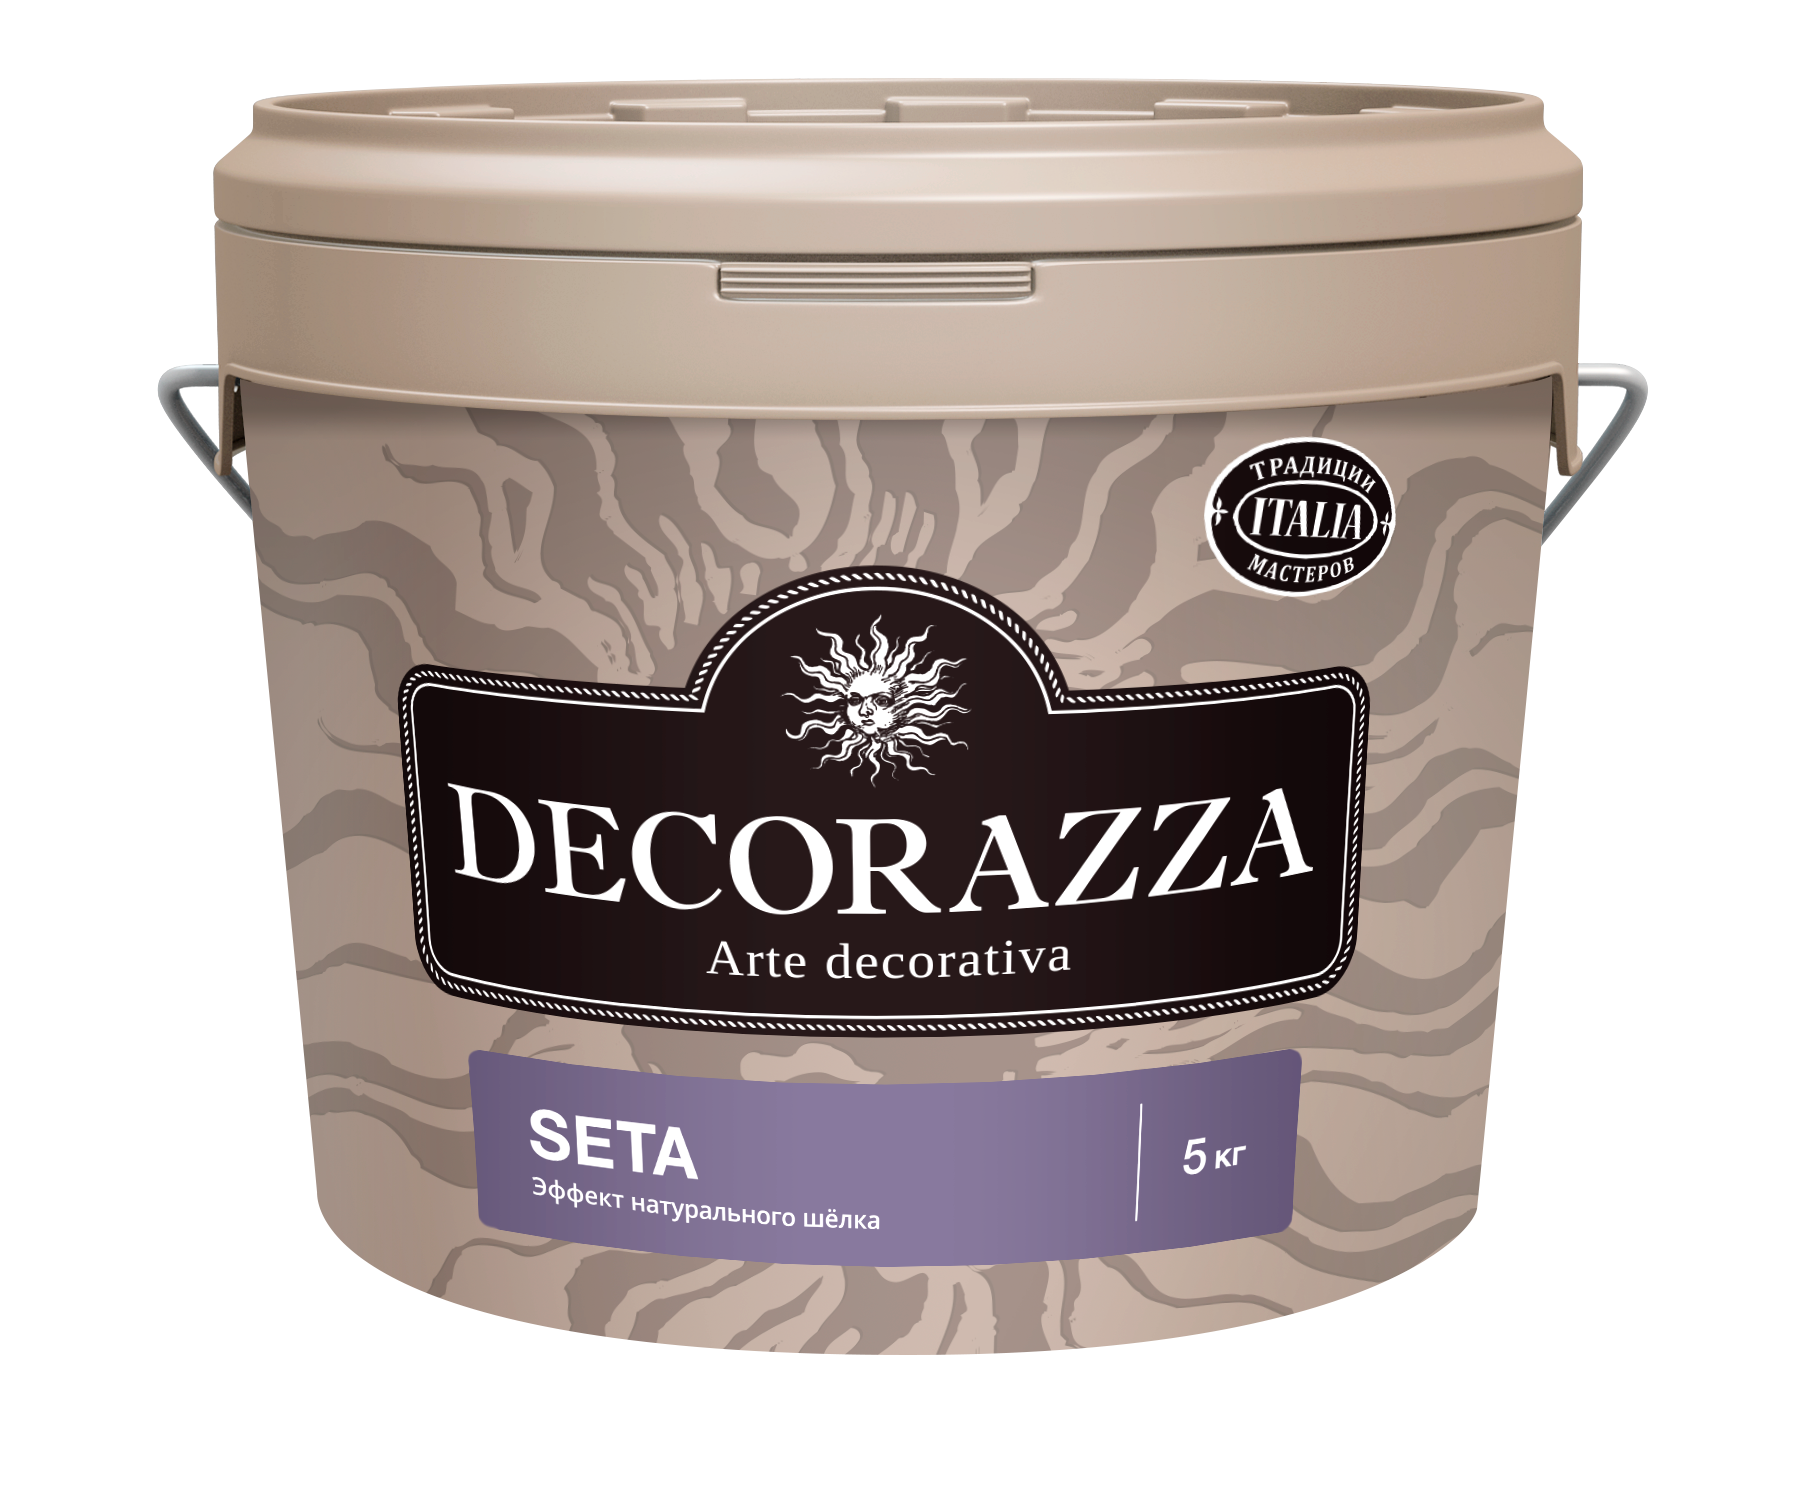 Декоративная штукатурка эффект натурального шелка Decorazza Seta Argento ST 001, серебро, 5 кг